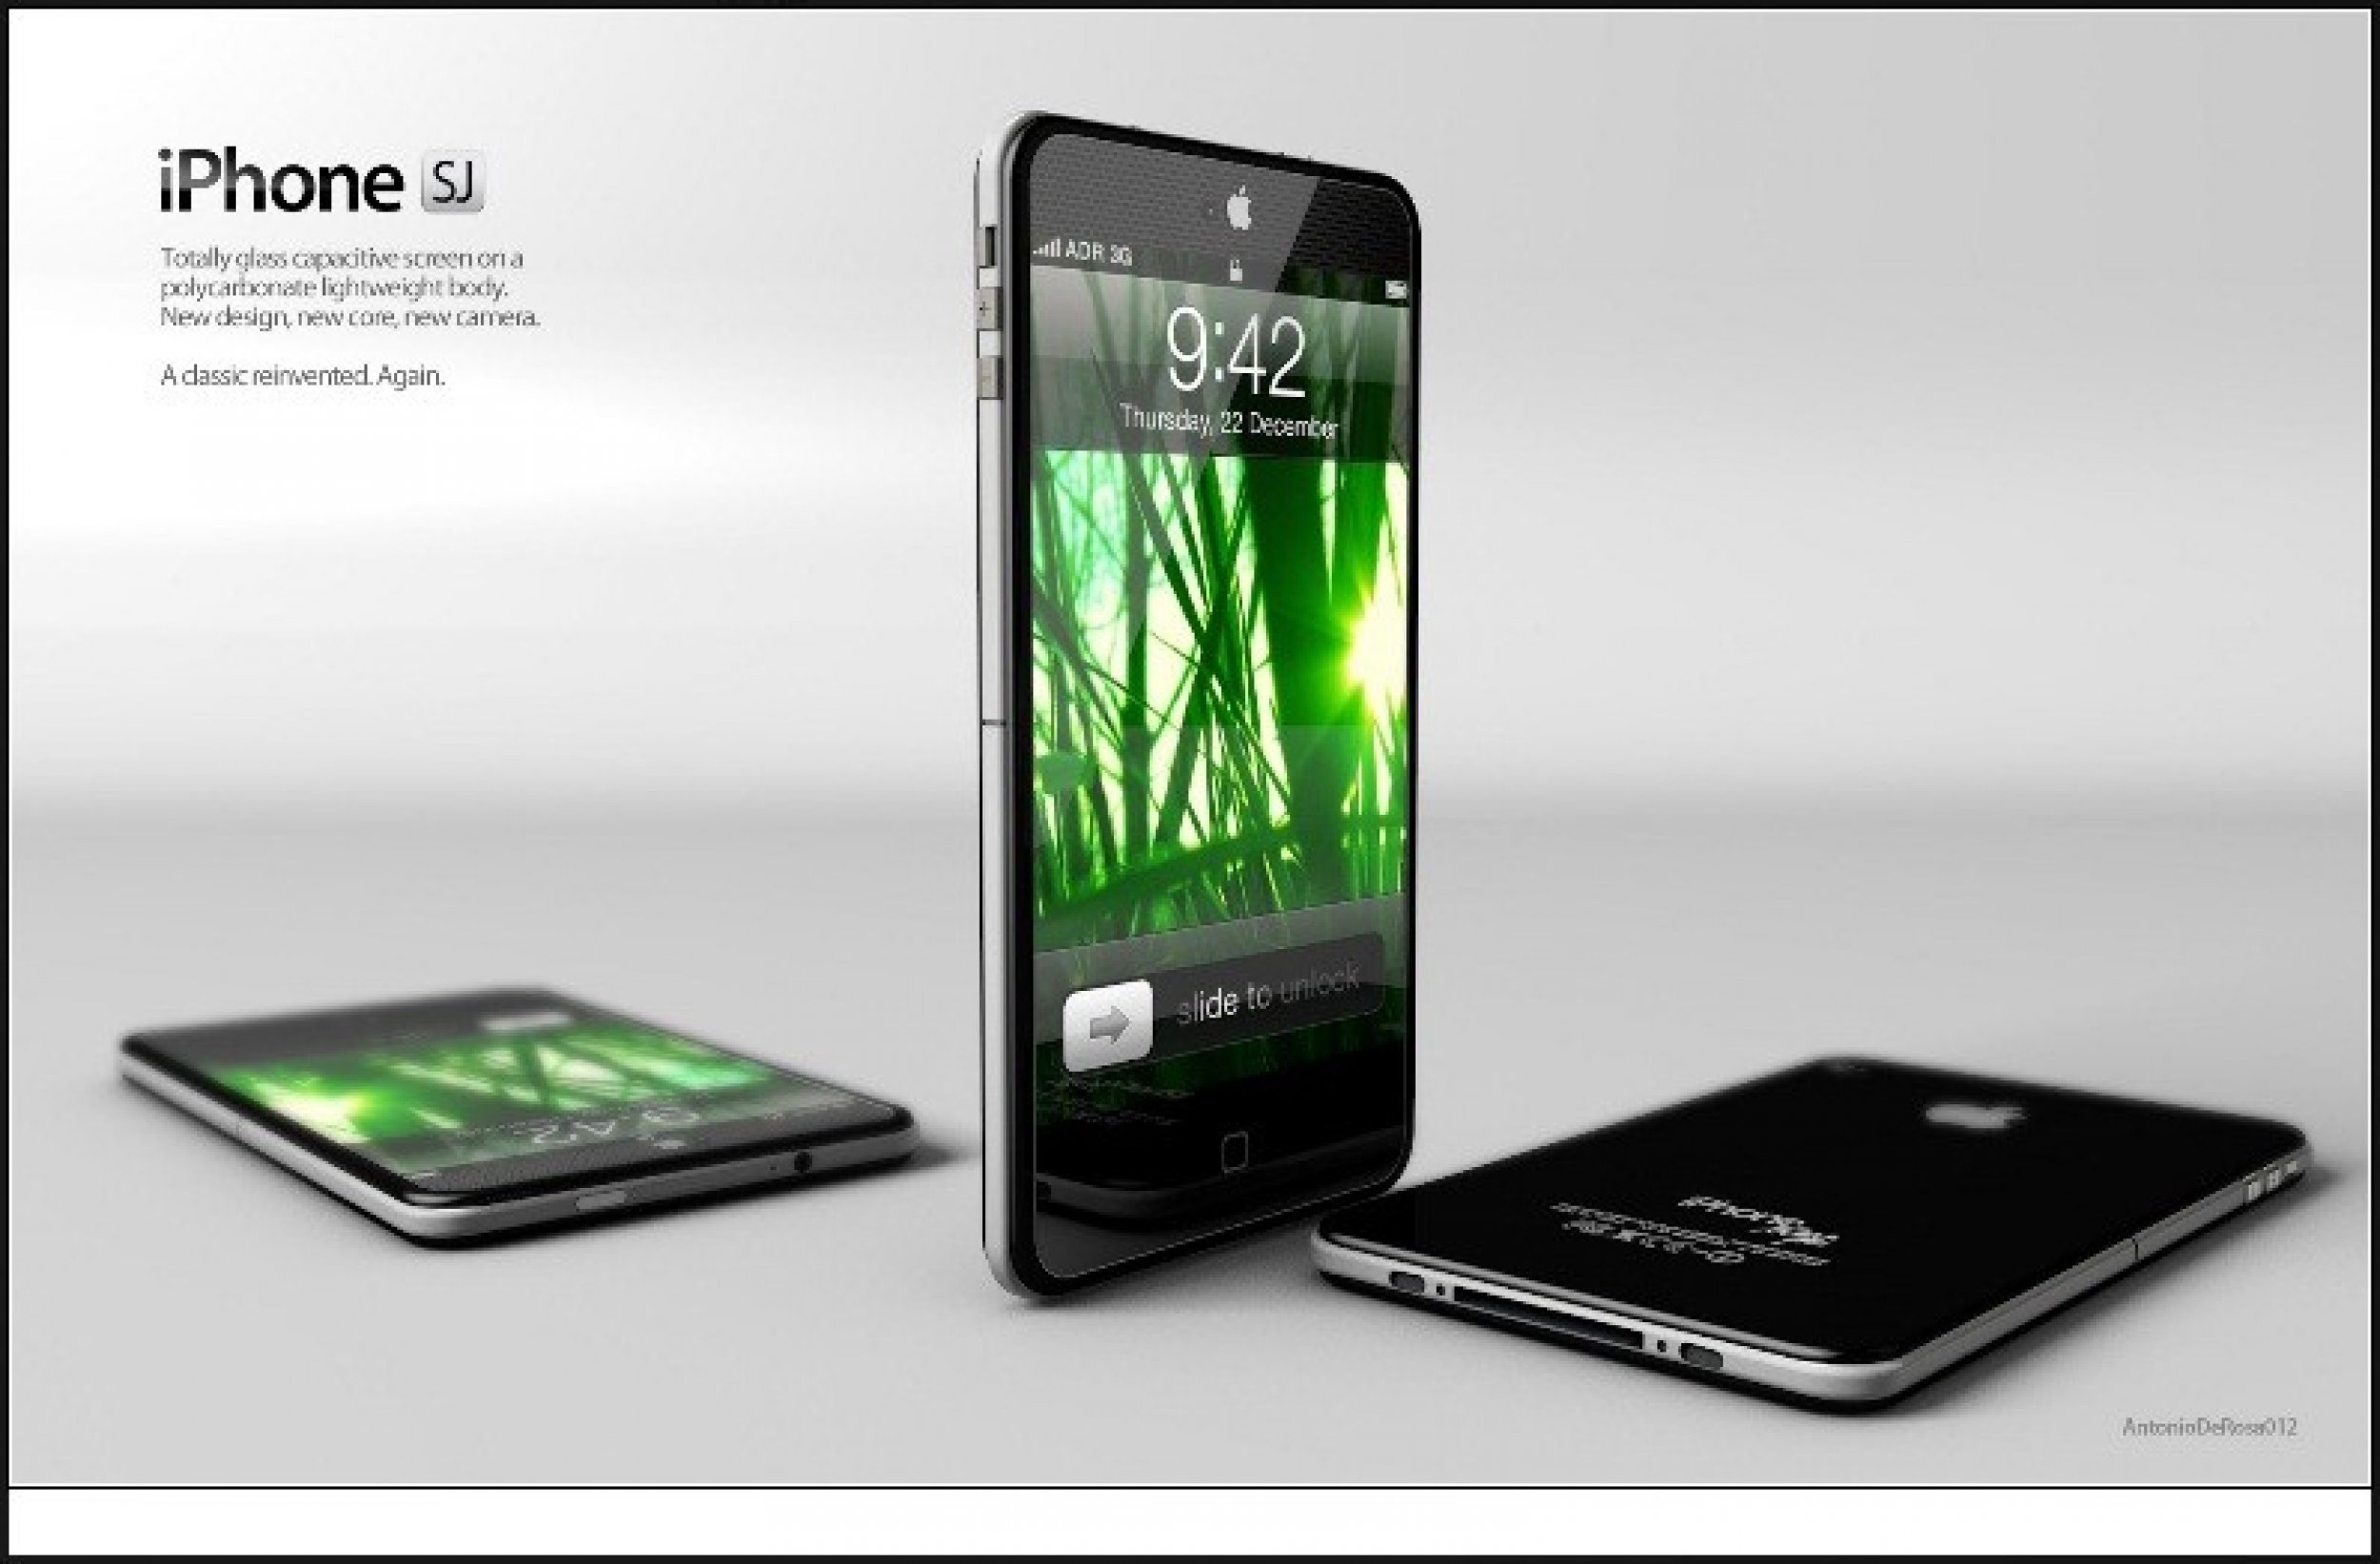 iPhone SJ Concept - Design by Antonio De Rosa of ADR Studio